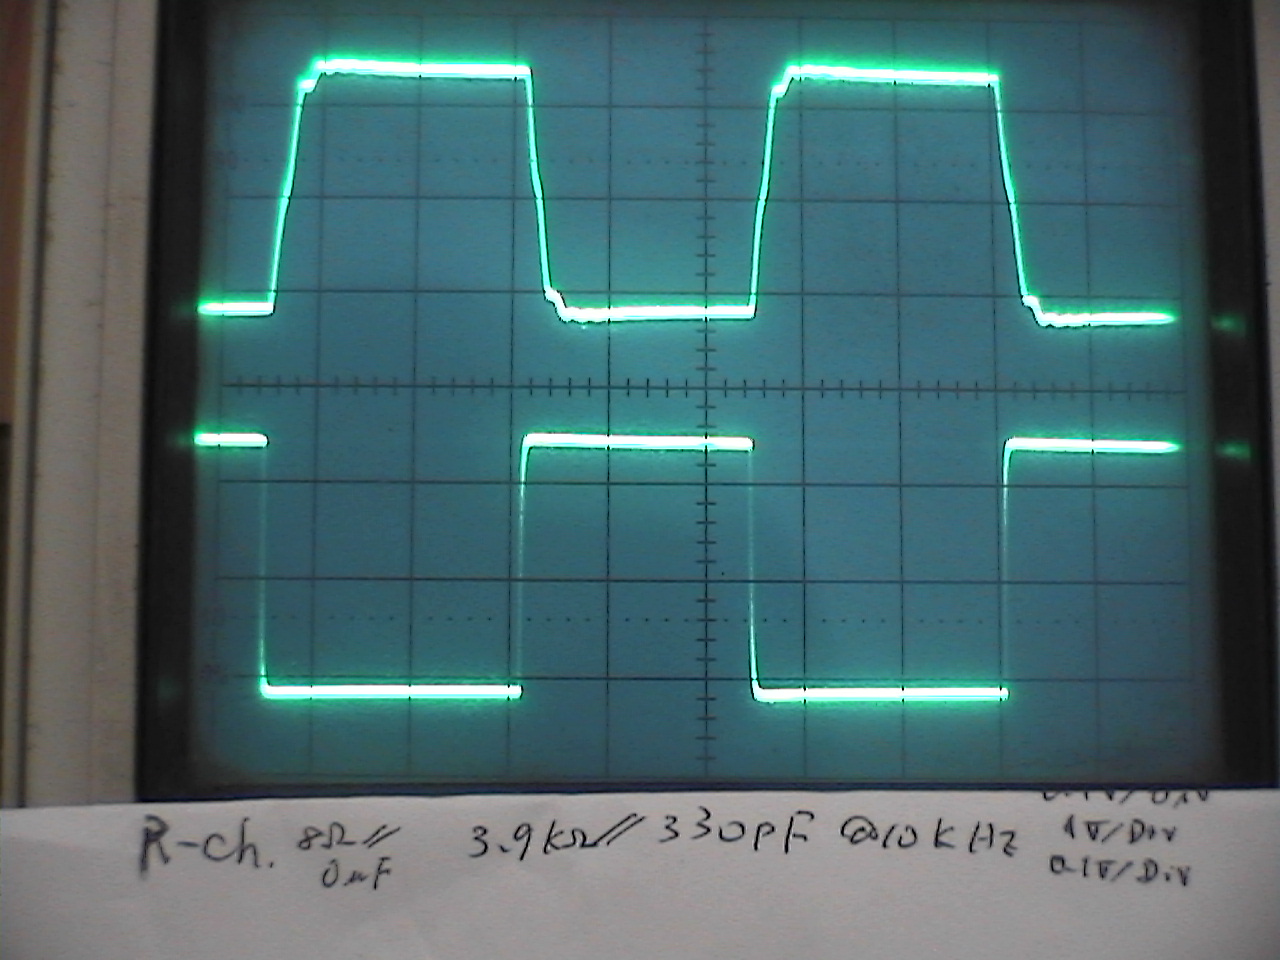 10kHz square wave response w/ 8ohm